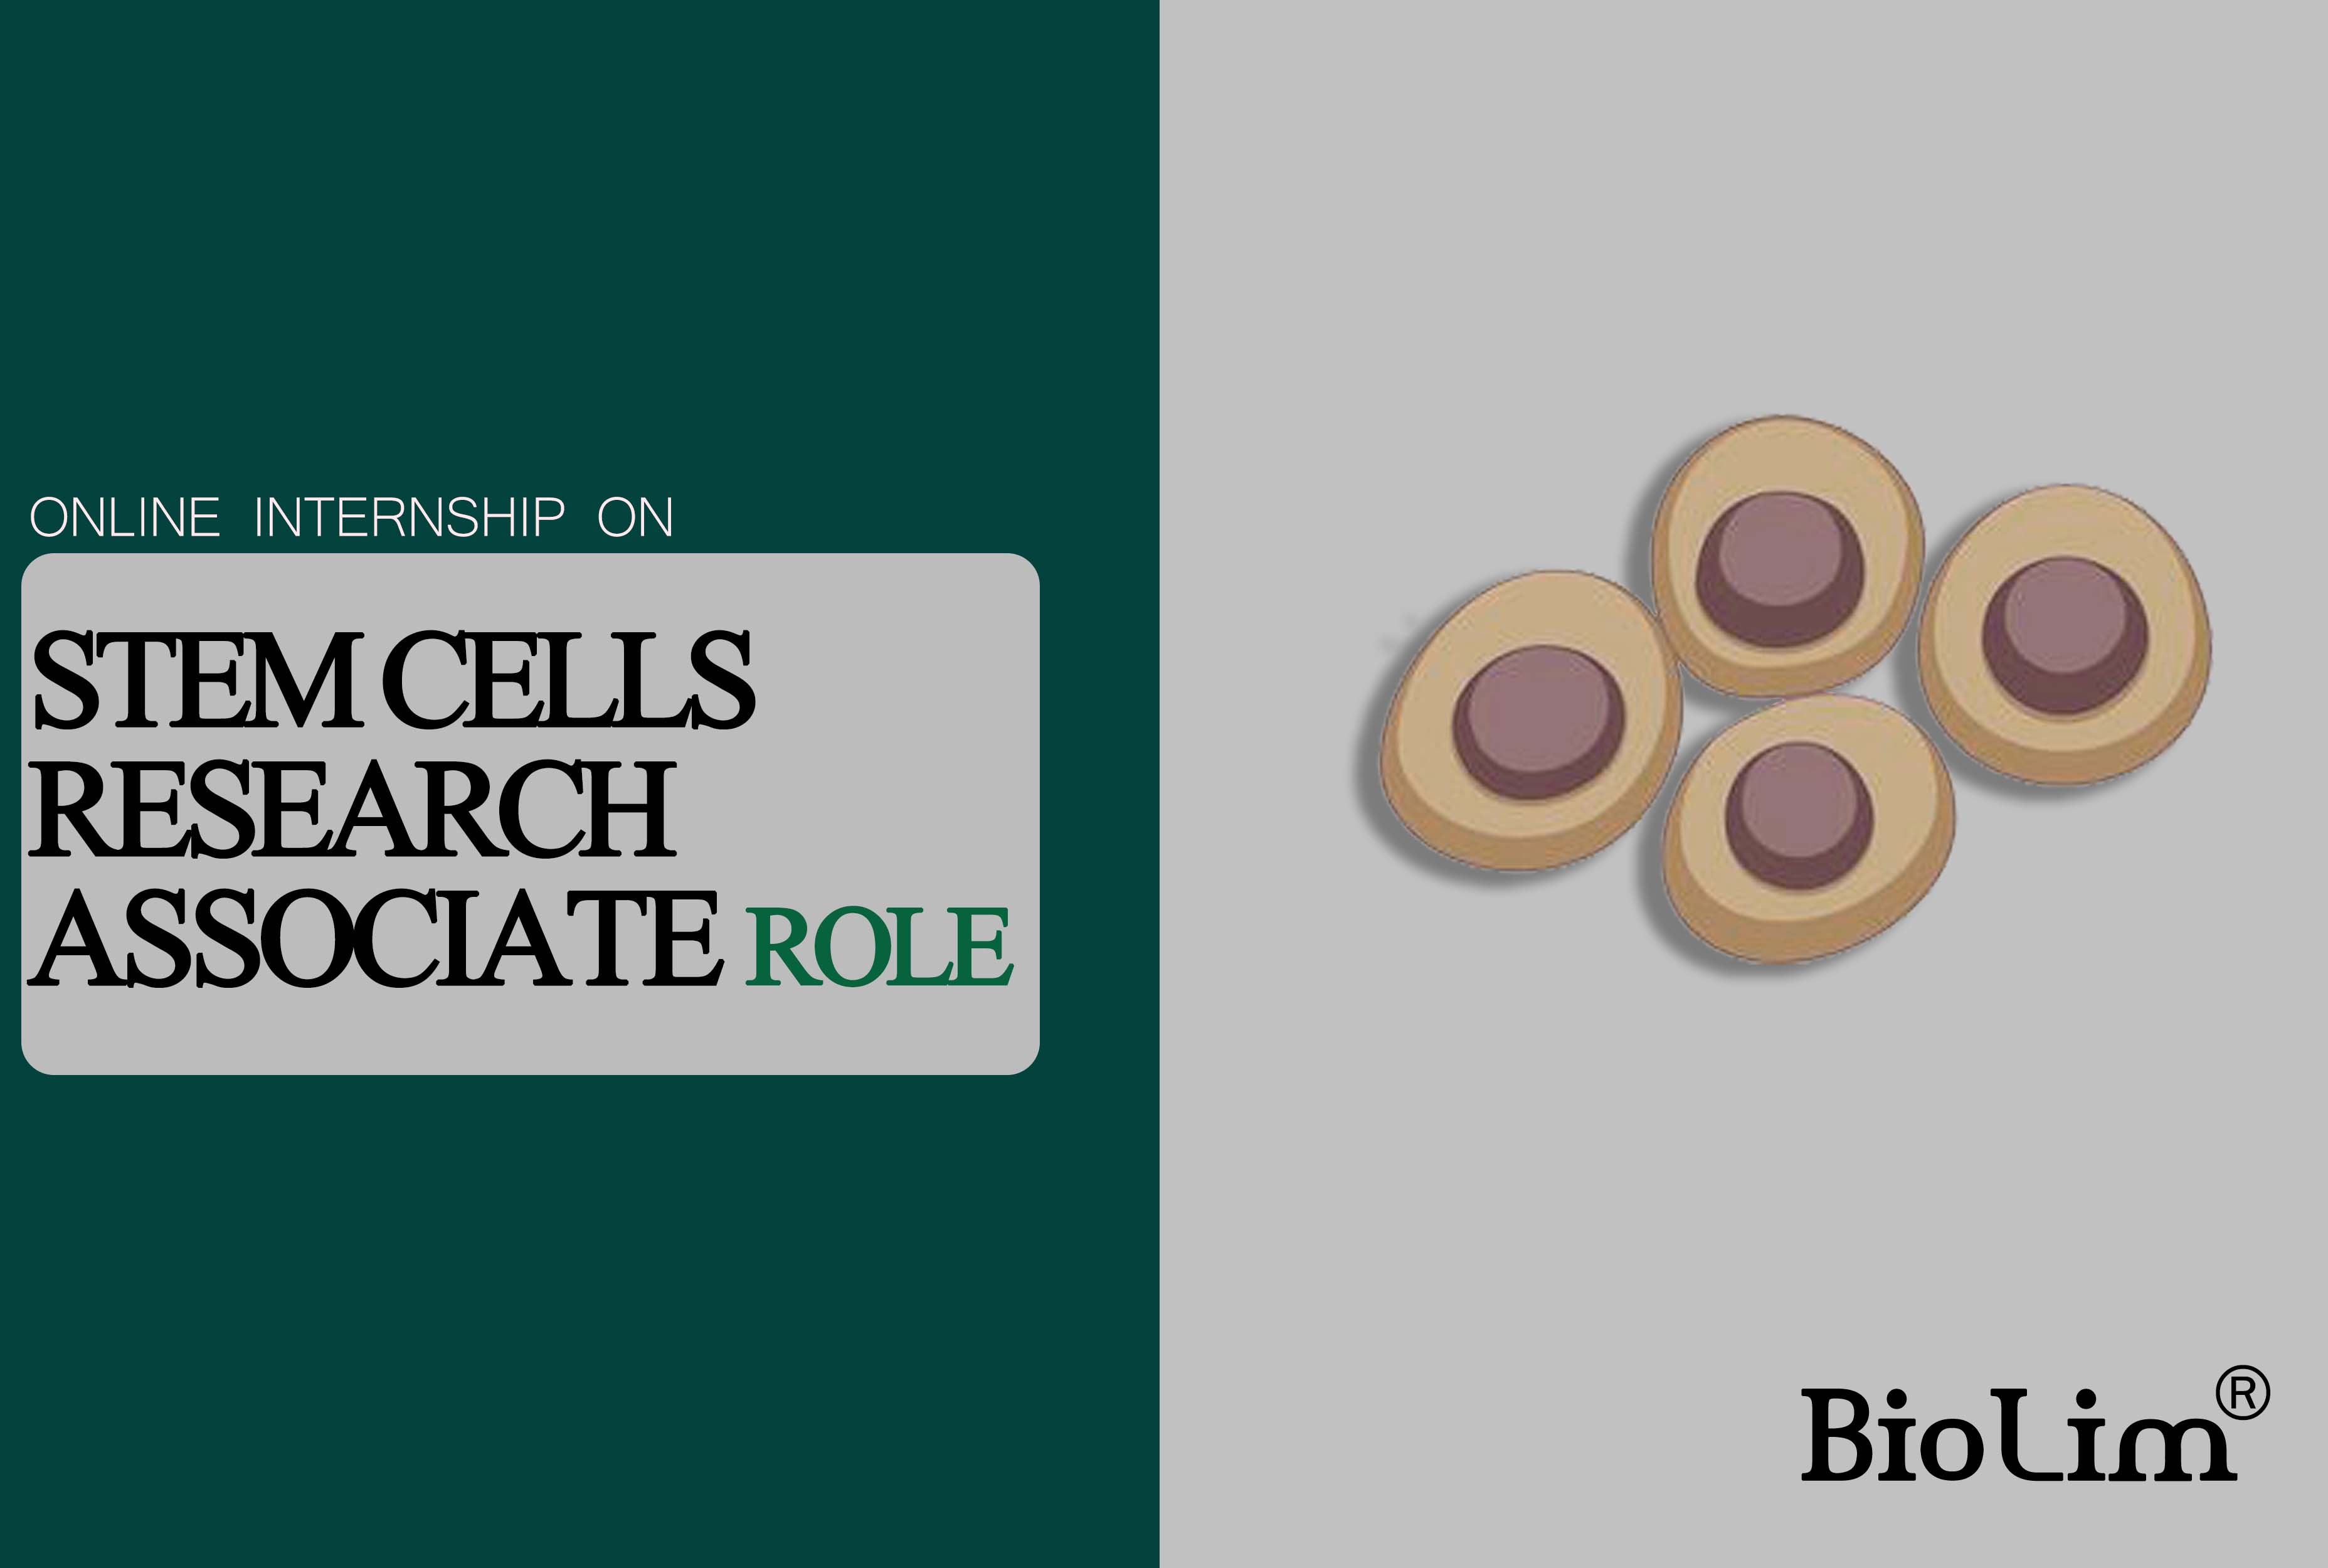 Online internship on stem cells research associate role